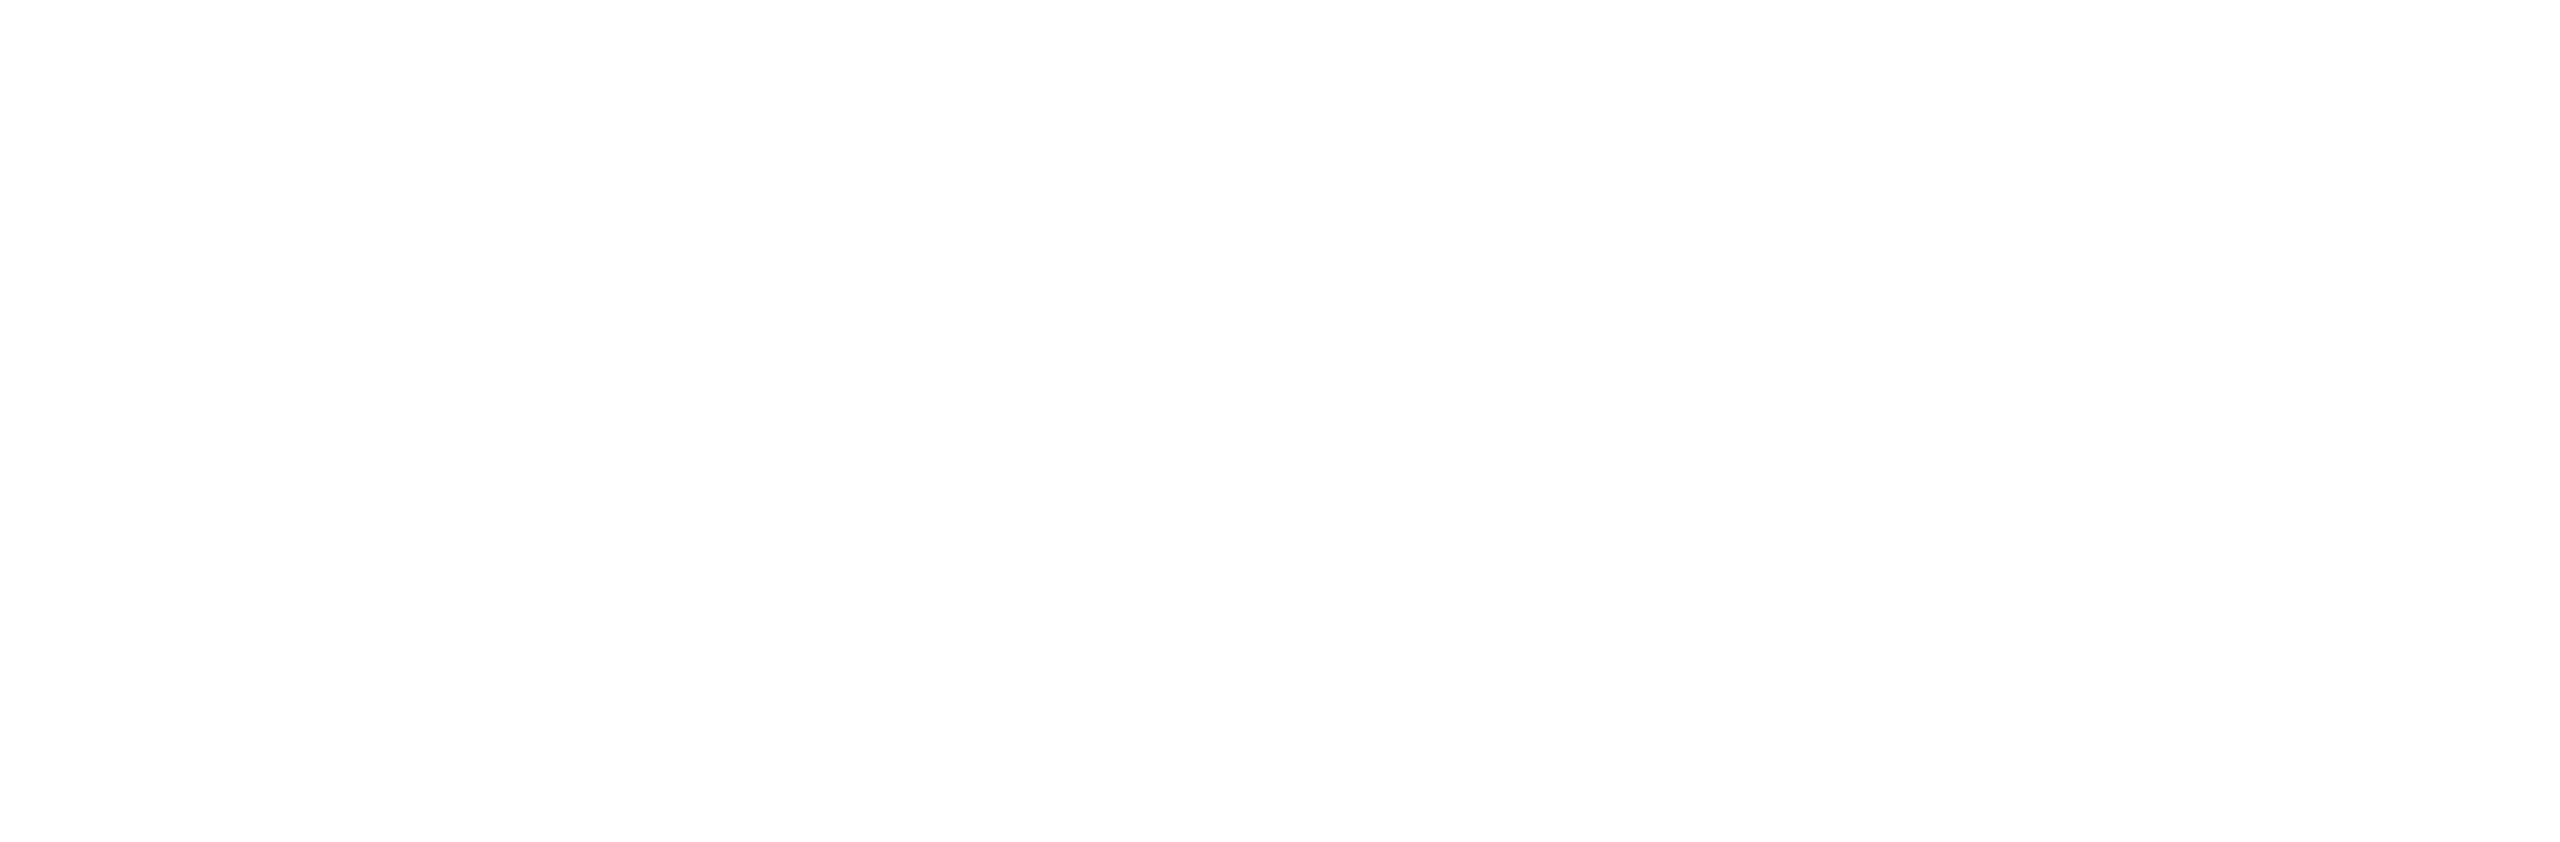 Business Kids